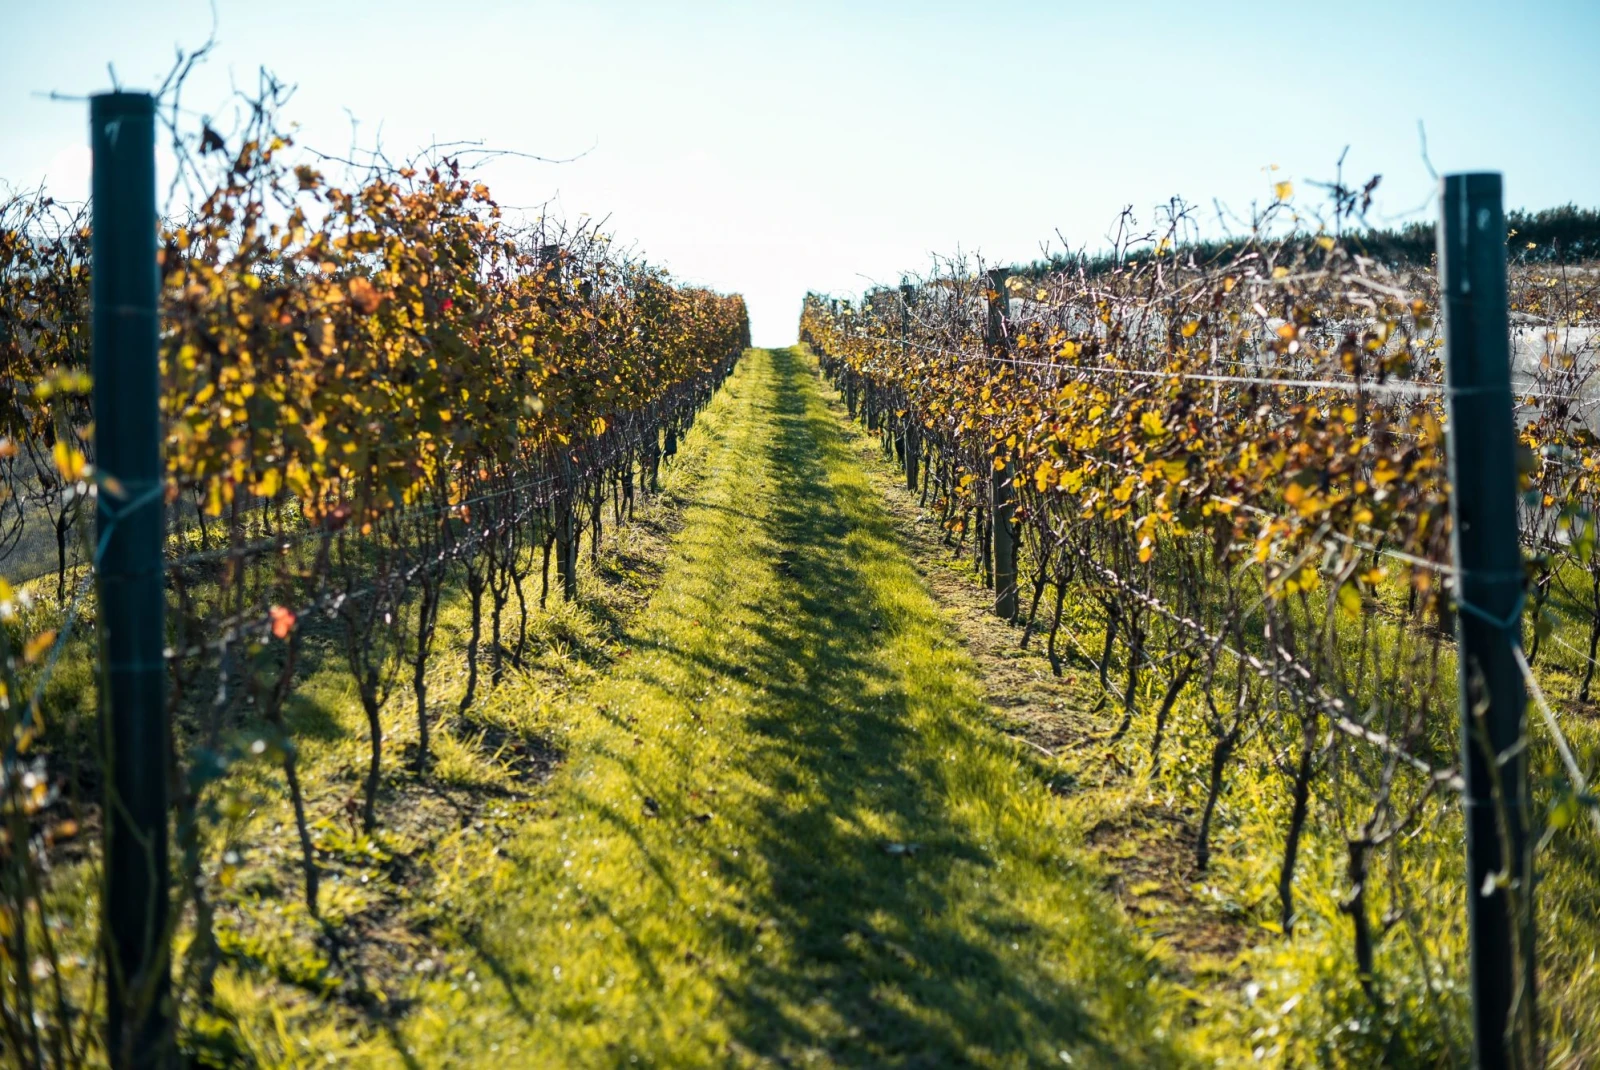 rows of grape vines